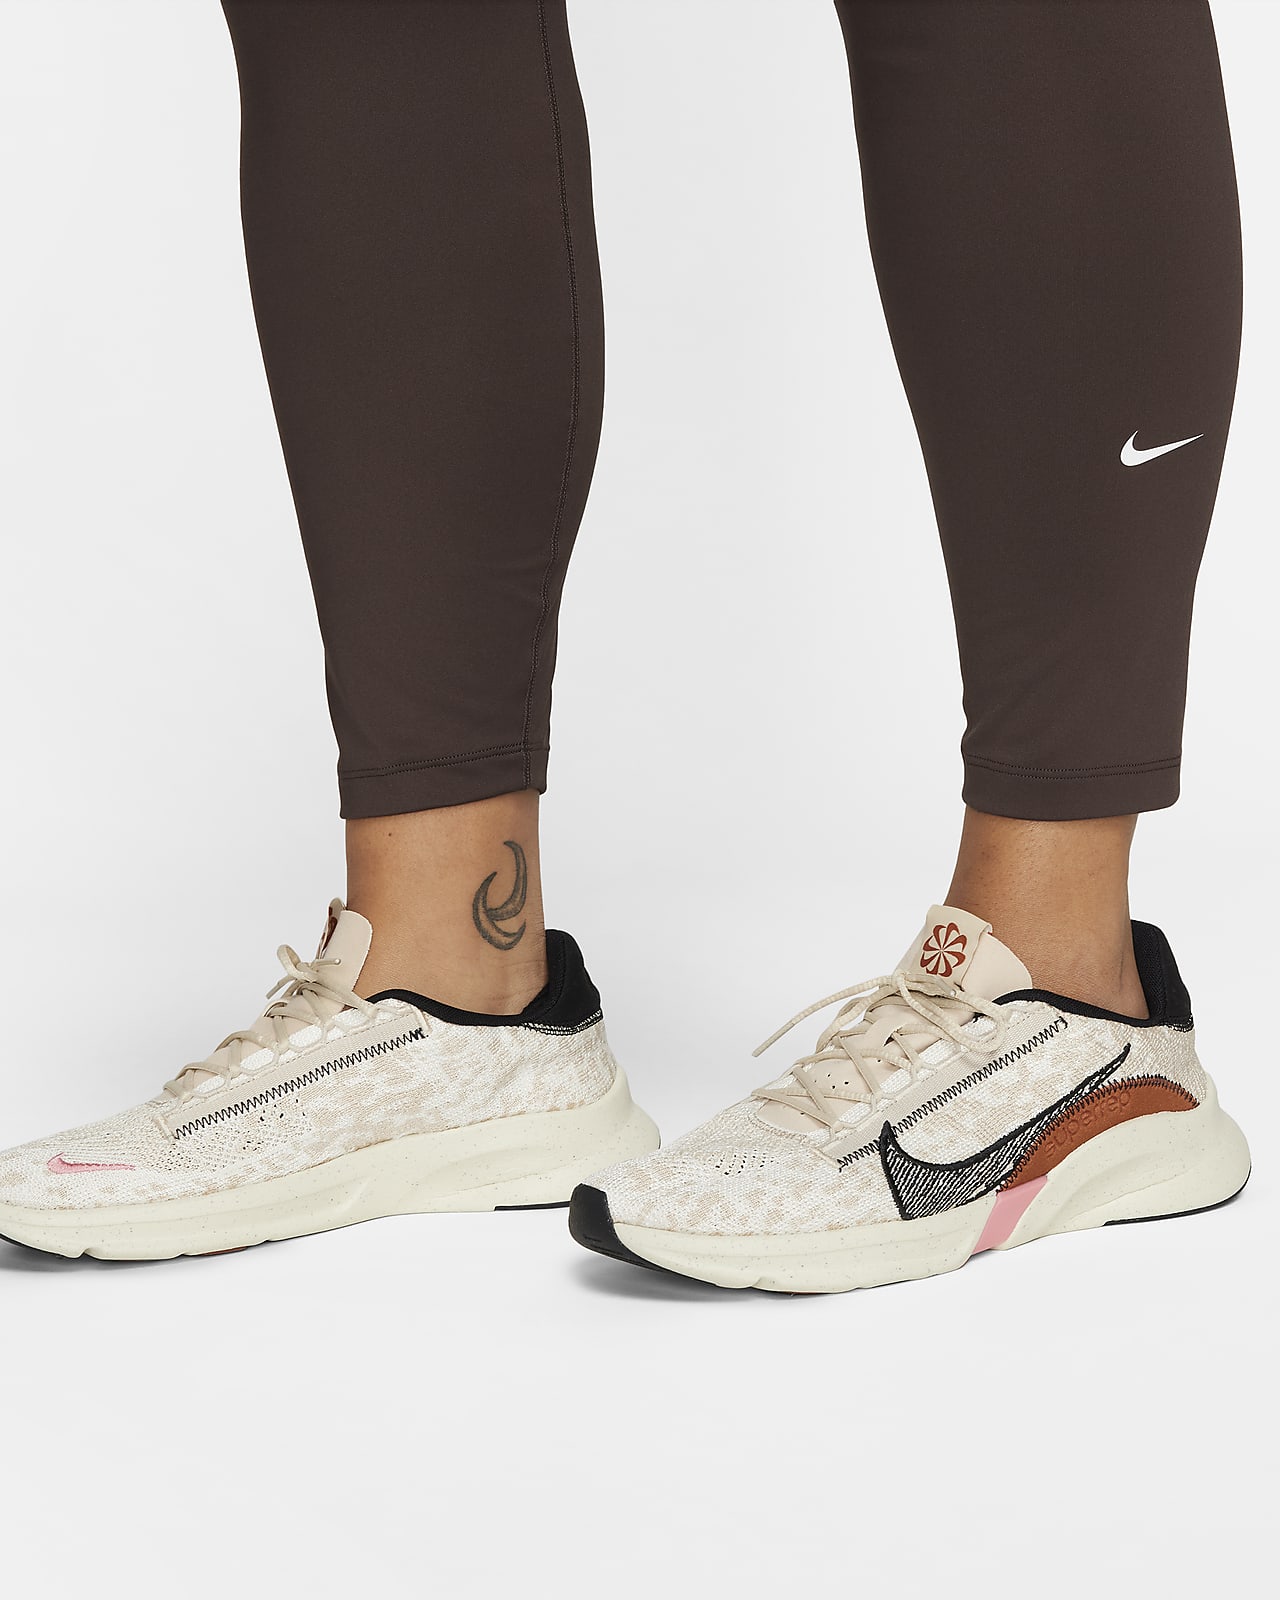 Nike One Women's High-Rise Leggings (Plus Size)